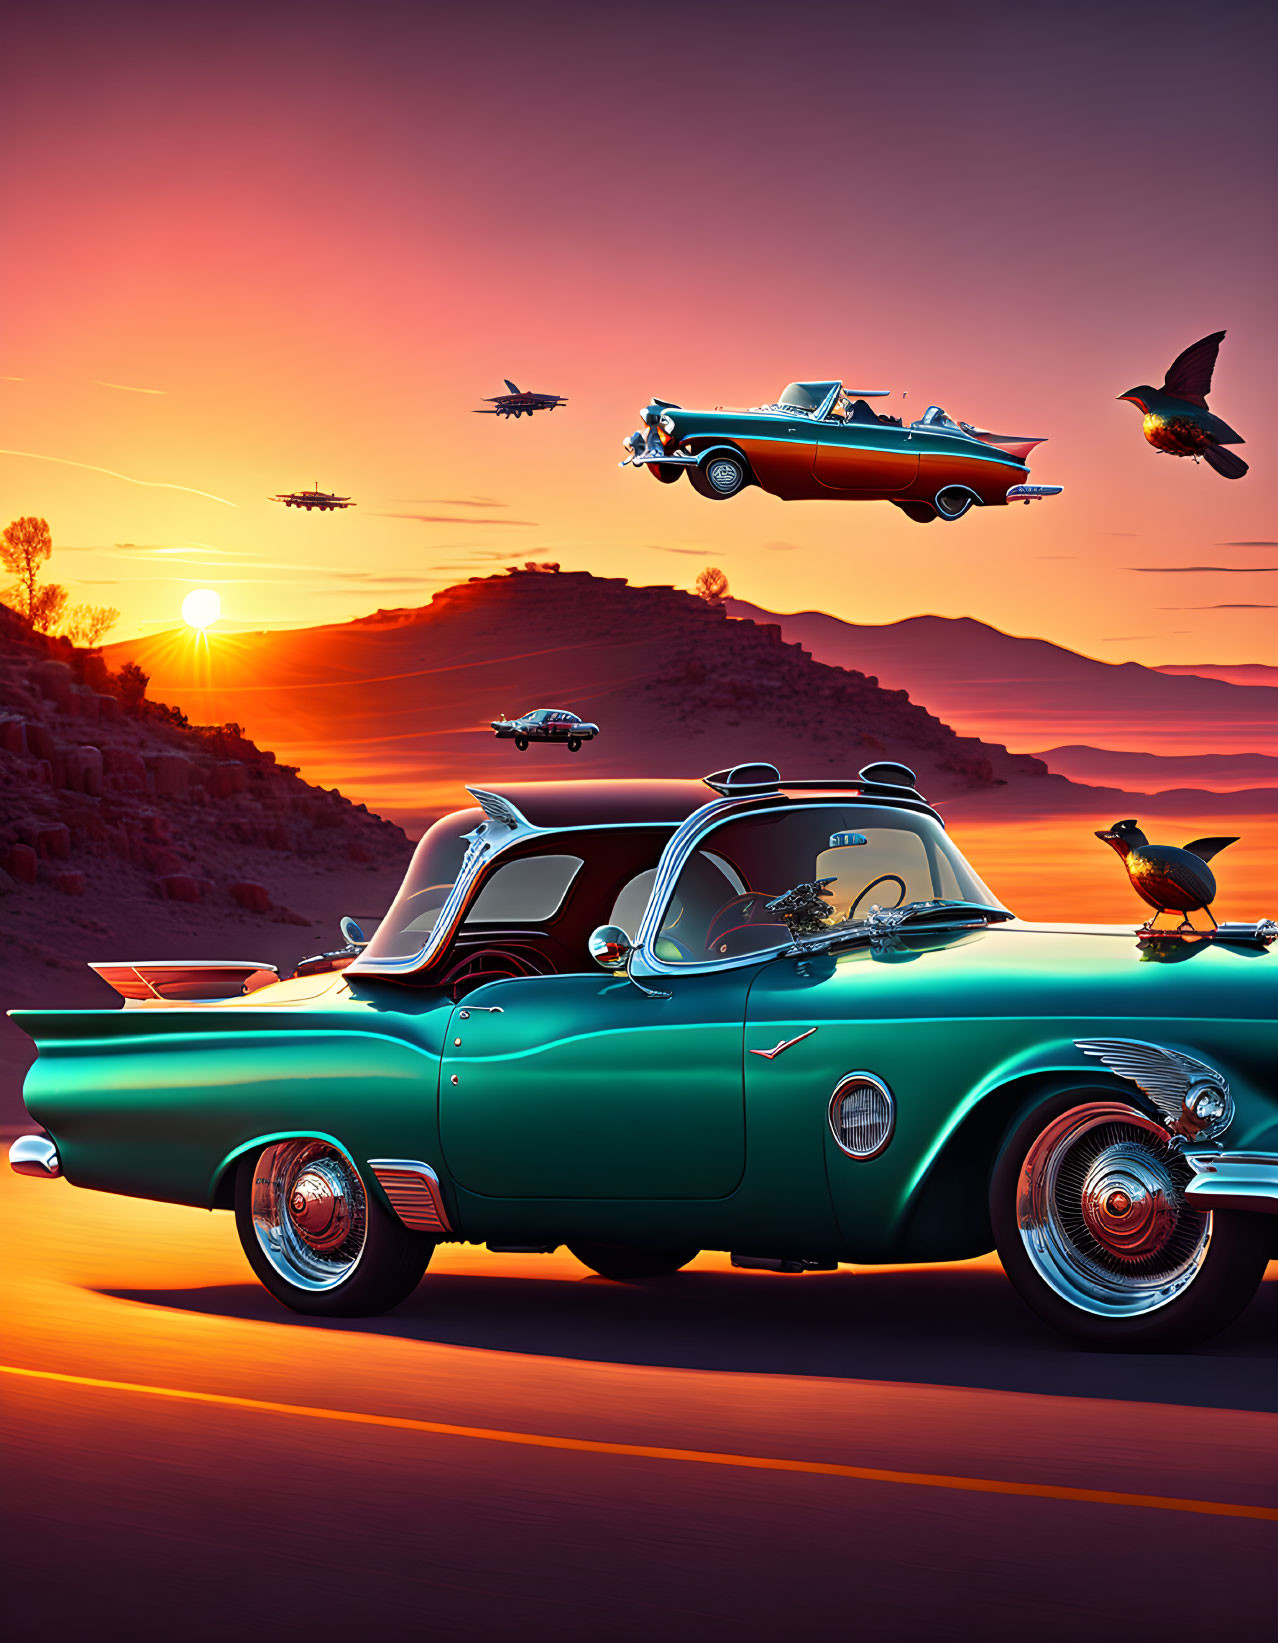 Vintage Cars and Birds Merge in Surreal Desert Sunset Scene